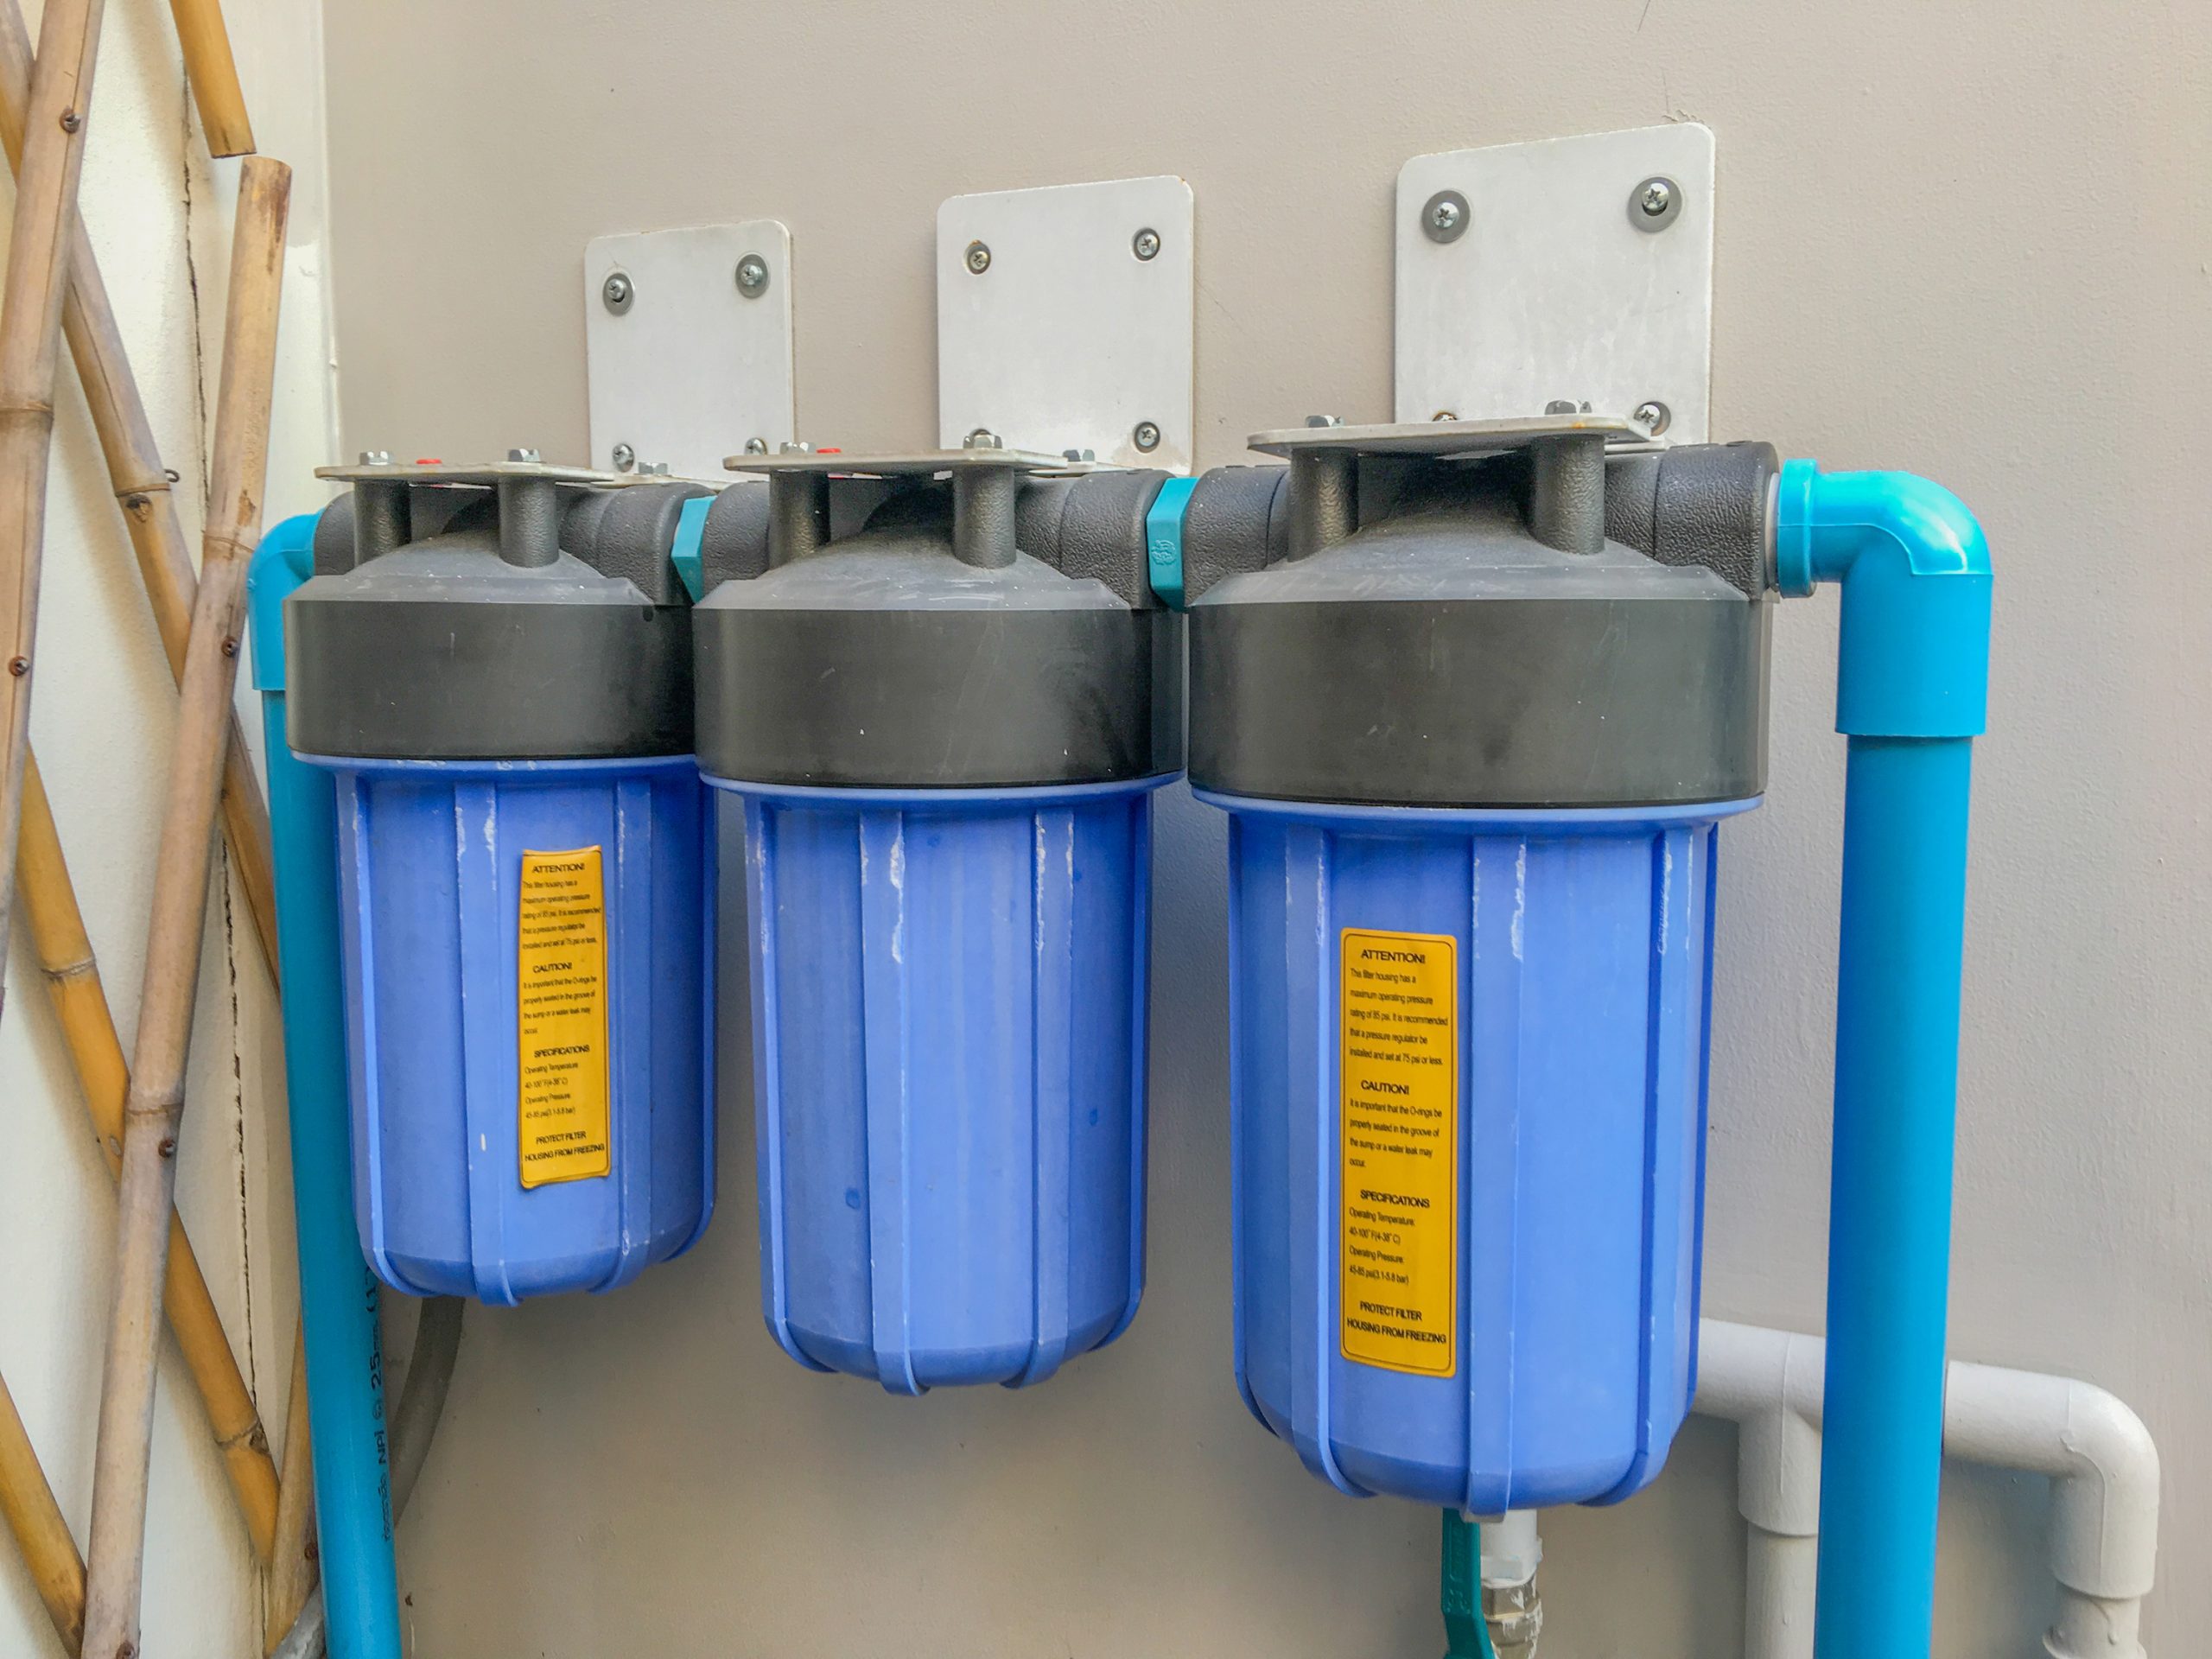 Deionized Water Purification System 